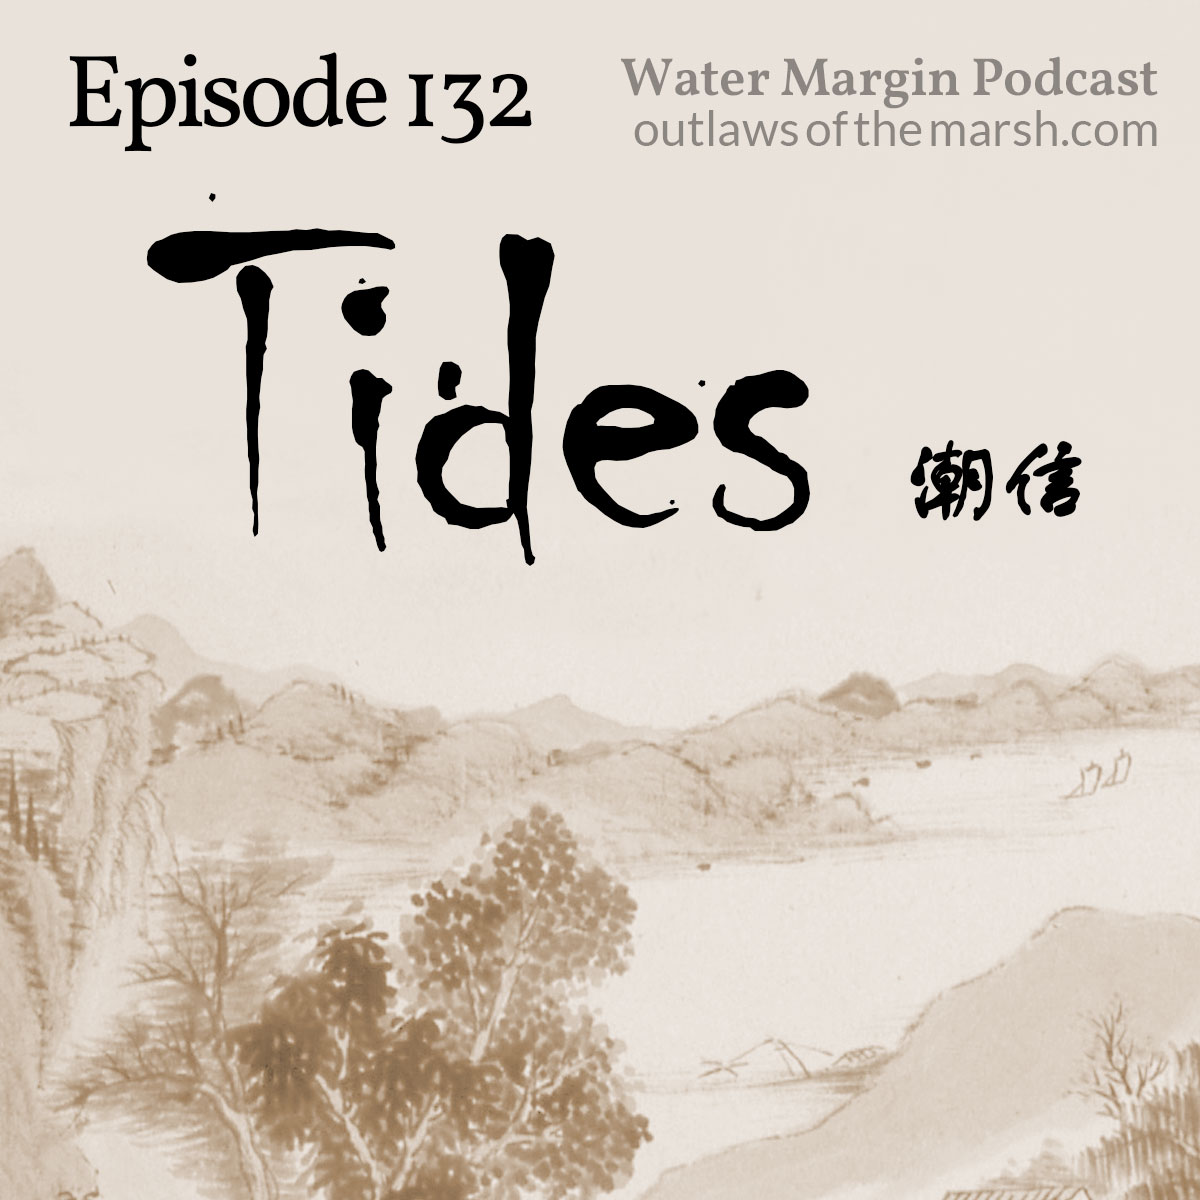 Water Margin Podcast: Episode 132